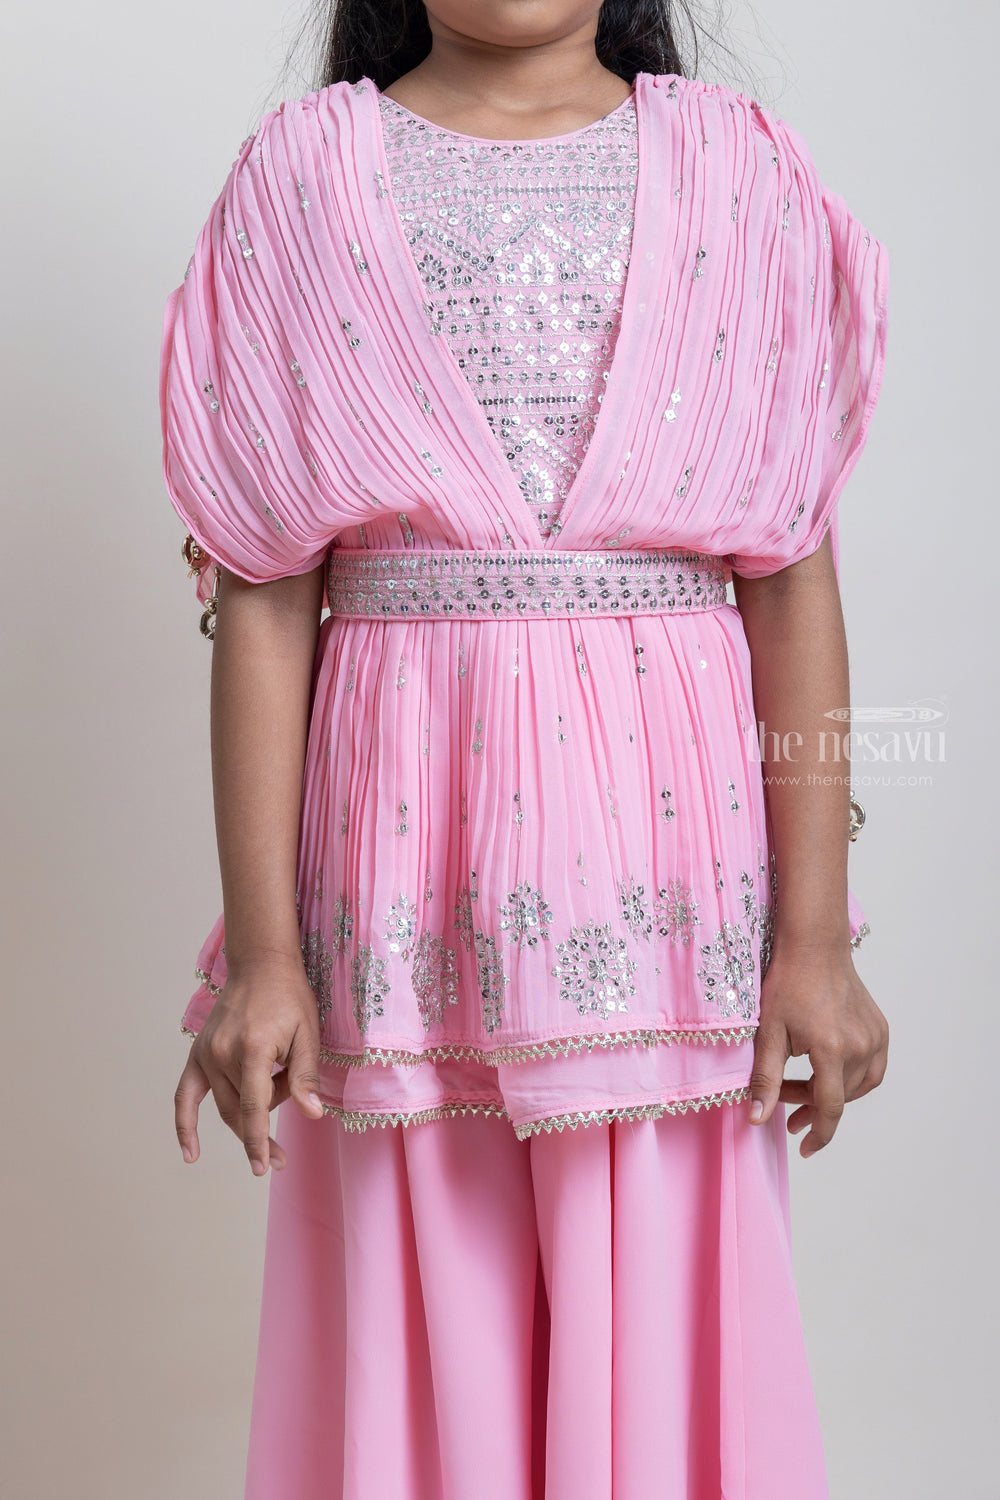 The Nesavu Girls Sharara / Plazo Set Elegant Salmon Pink Floral Designer Embroidery Tunic Tops And Palazzo Suit Sets For Girls Nesavu Pink Palazzo Designer Suit For Girls | Elegant Wear For Girls | The Nesavu